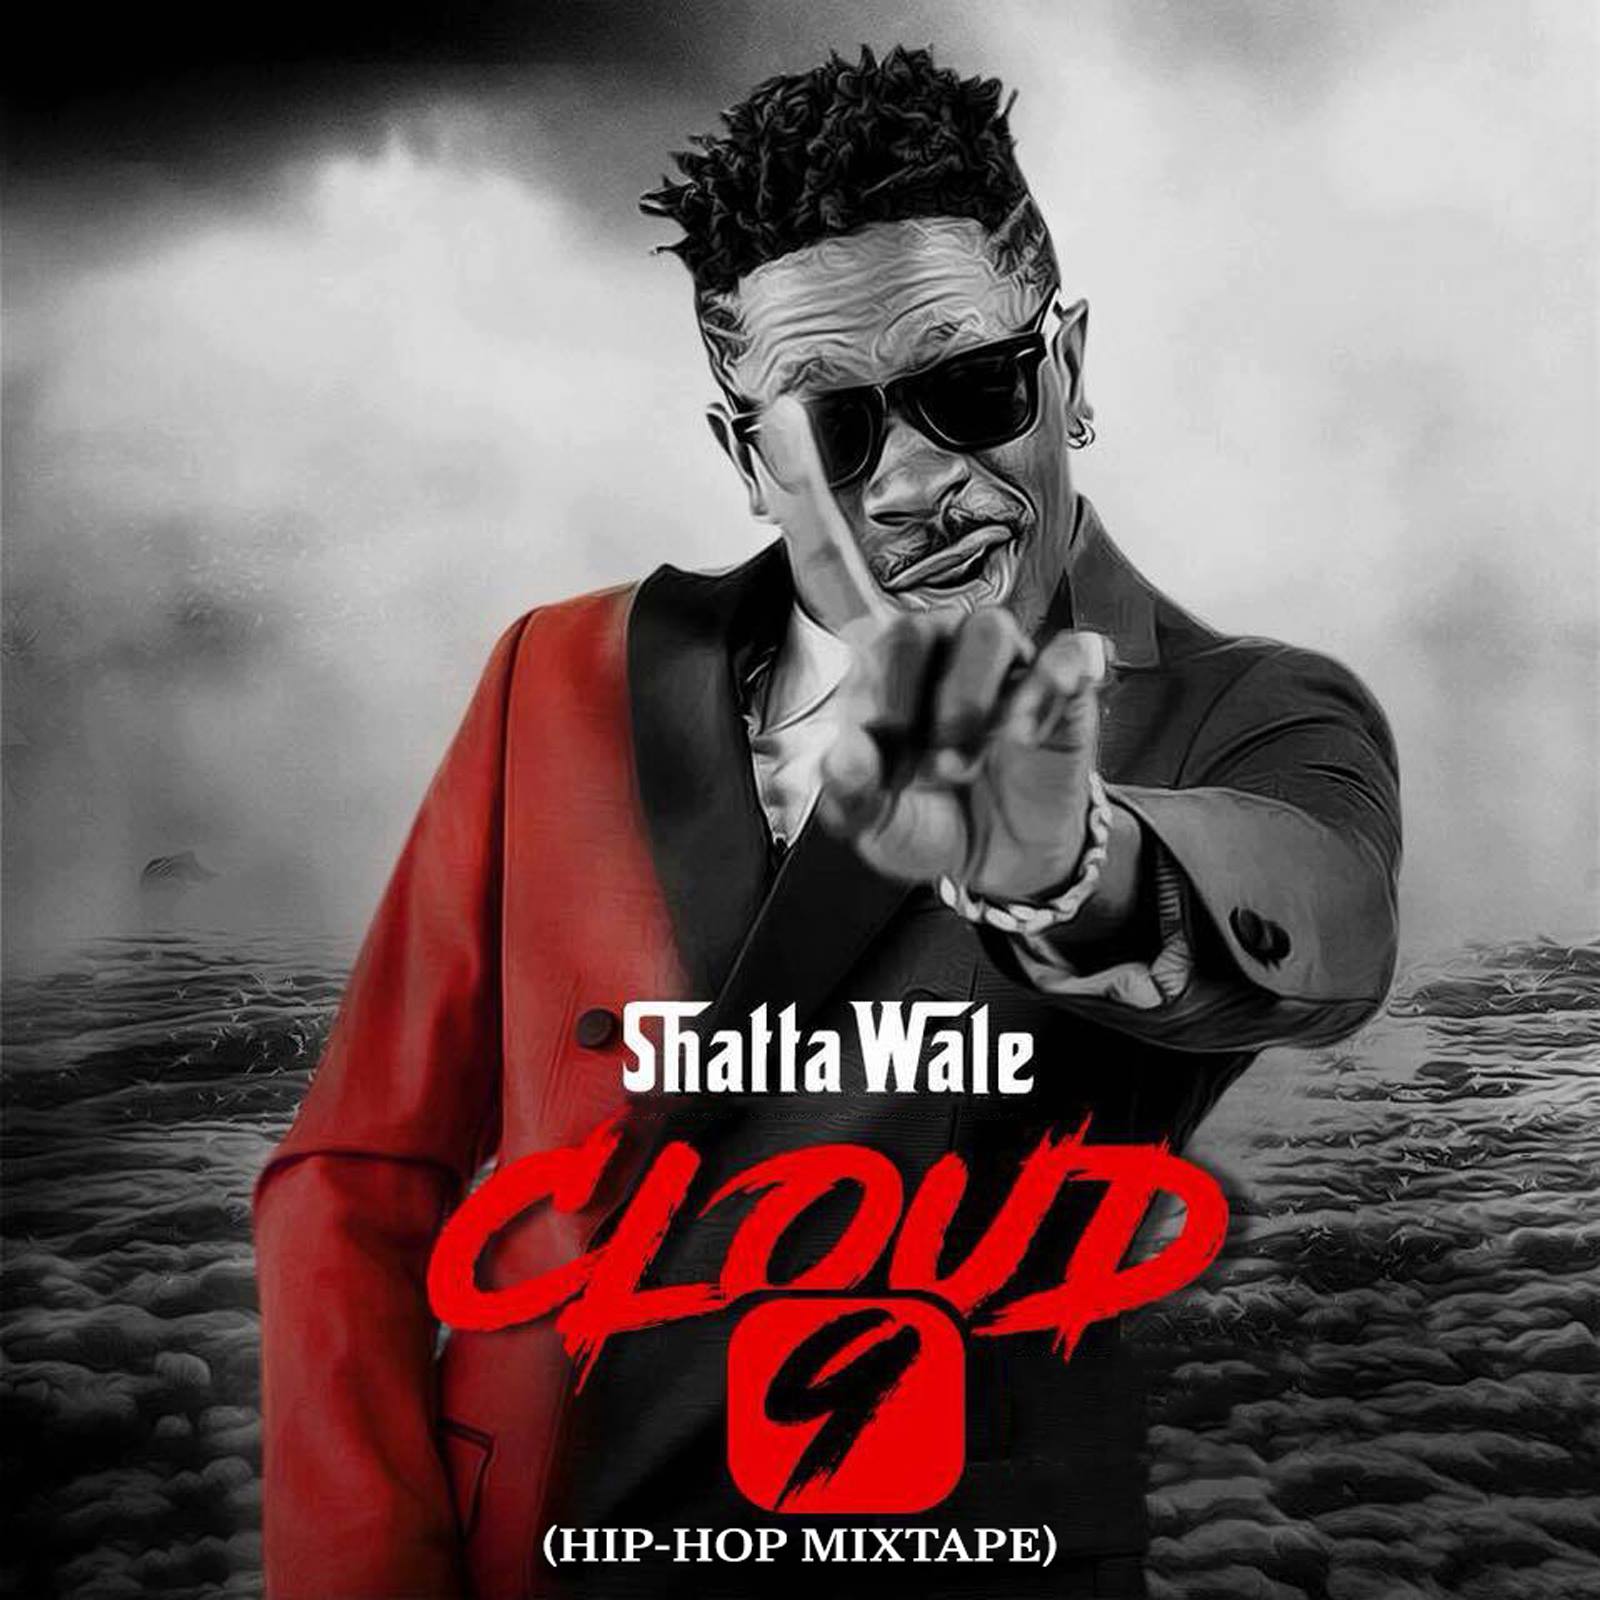 Cloud 9 (Hiphop Mixtape) by Shatta Wale